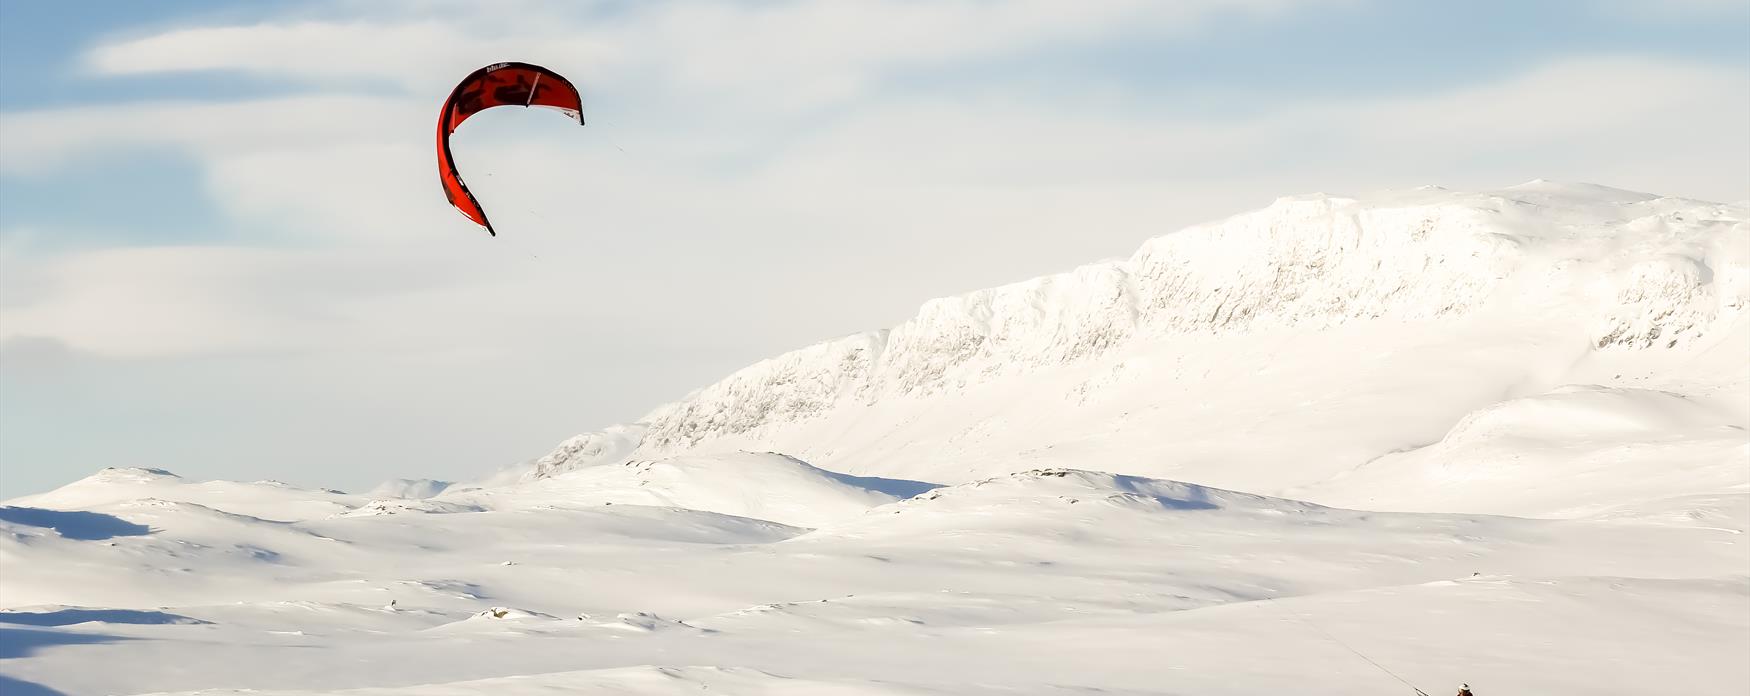 Kiting at Bergsjø Lake